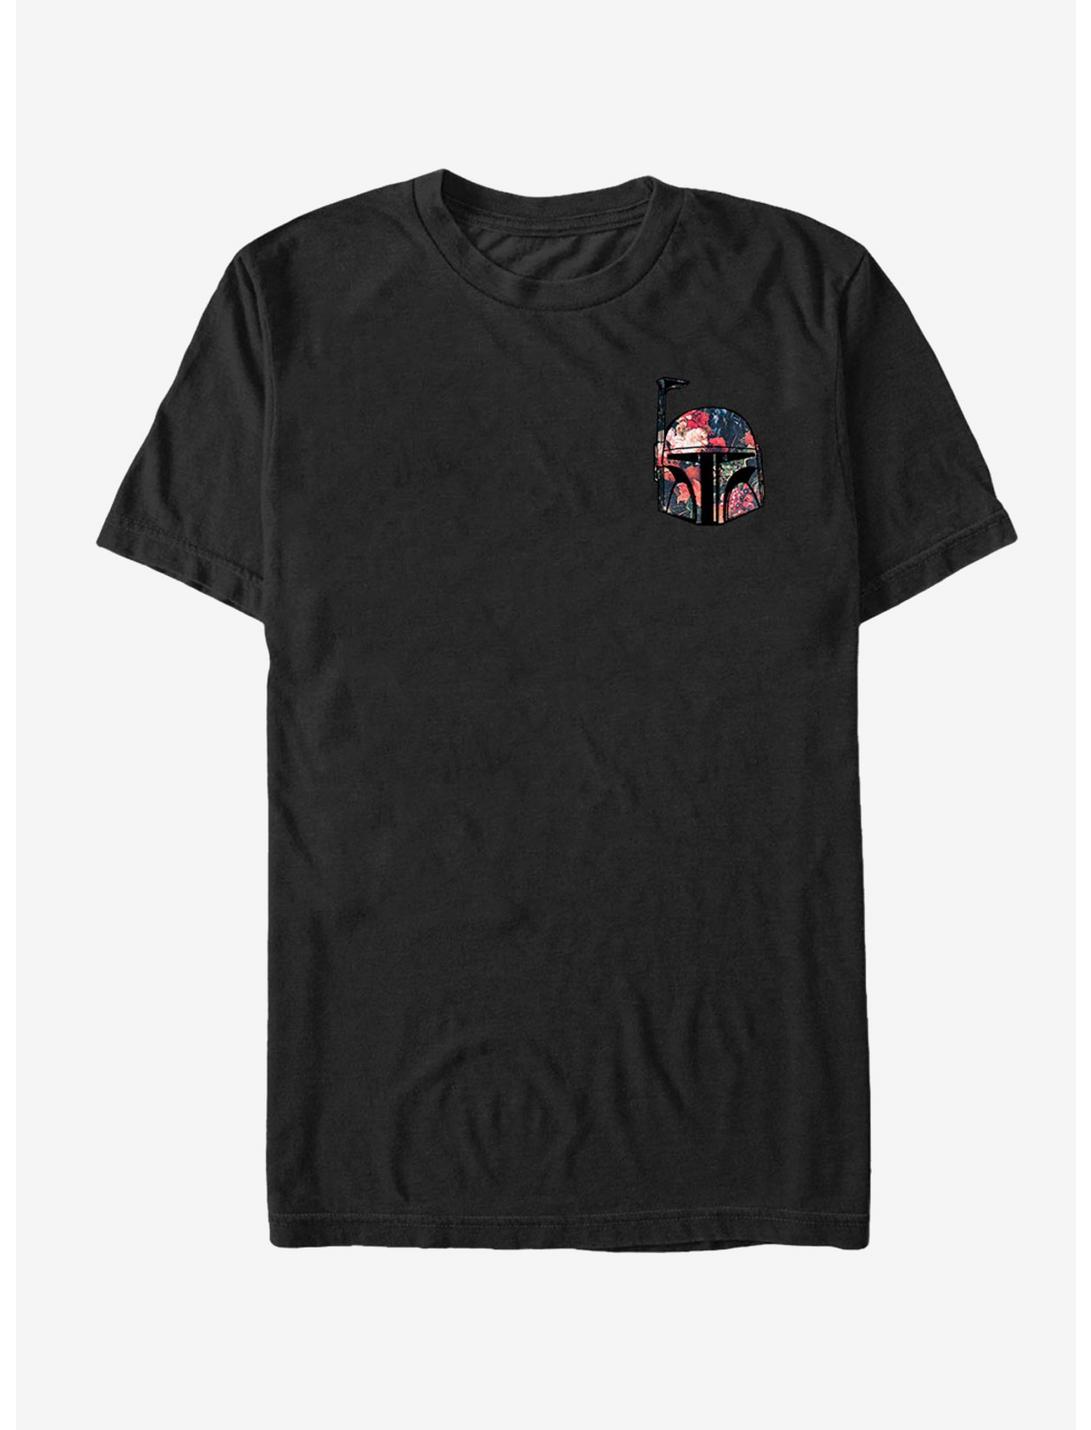 Star Wars Mini Floral Print Boba Fett T-Shirt, BLACK, hi-res